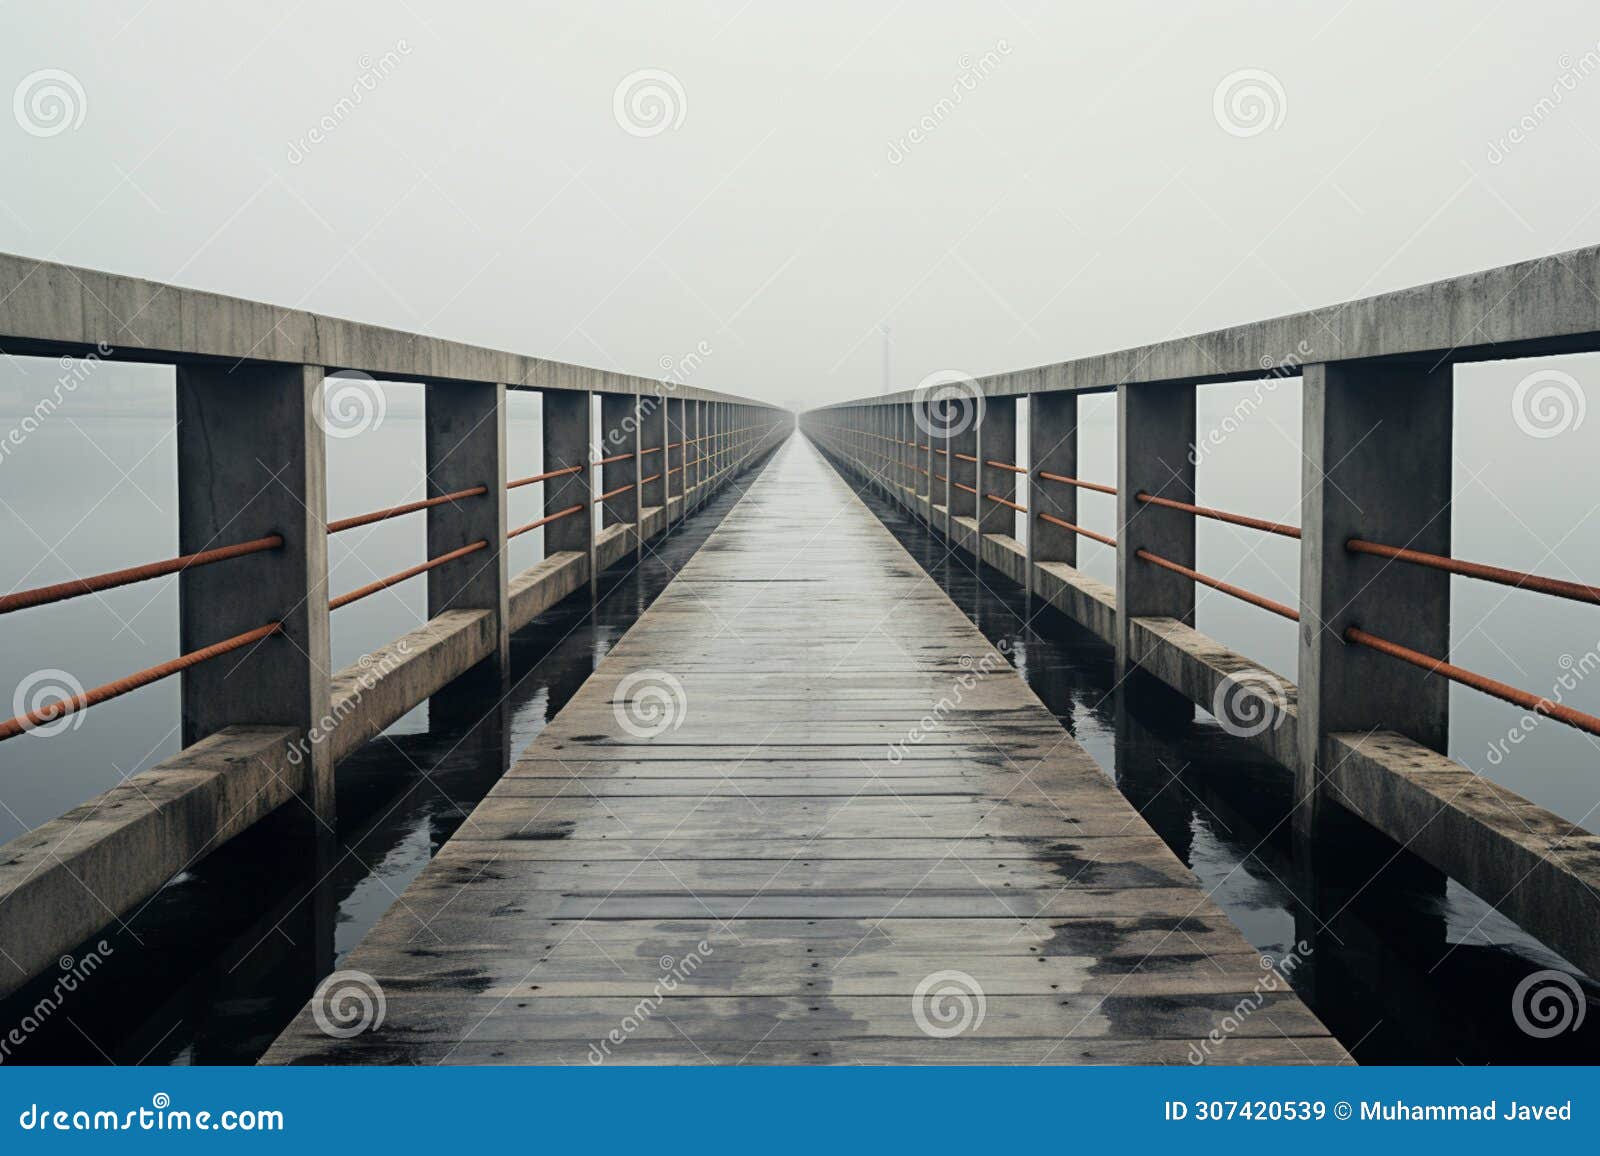 minimalist view explores unique textures in weather beaten drawbridges